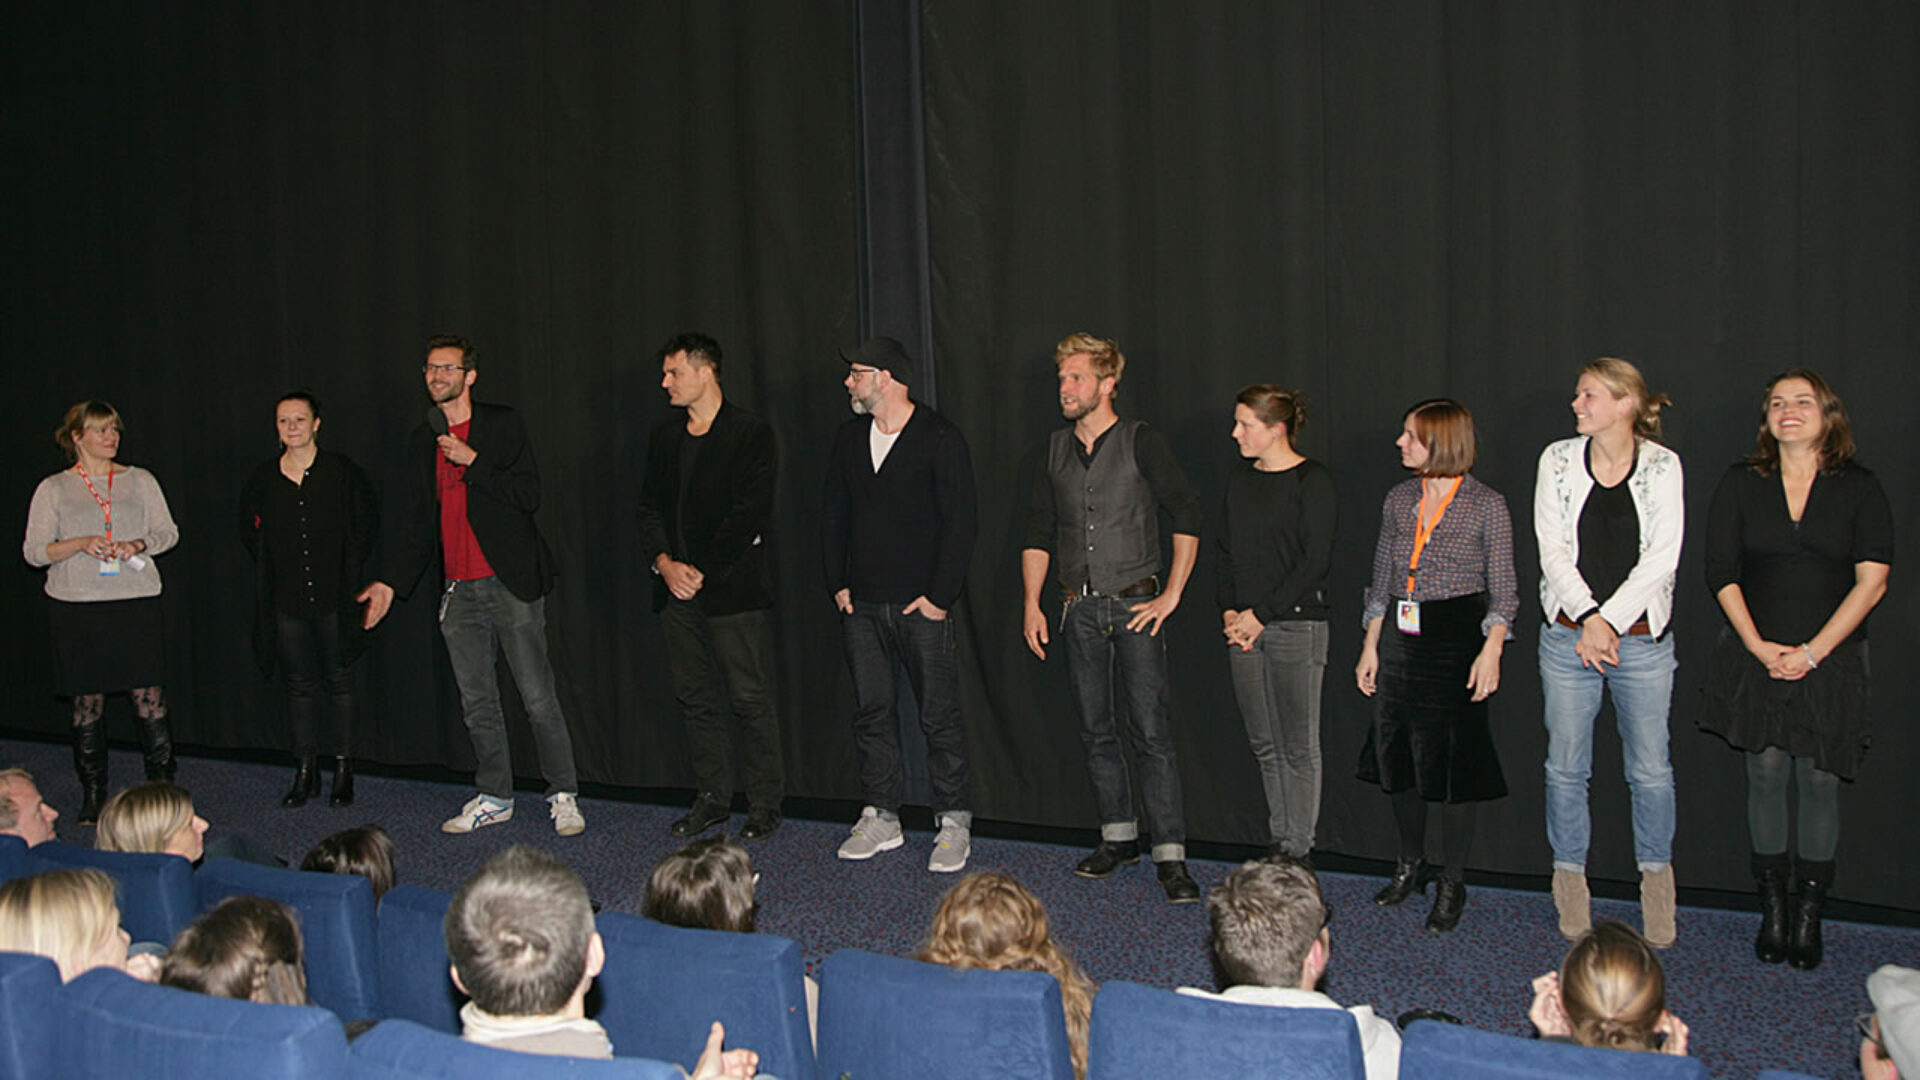 The team of BESTEFREUNDE at the 48th Hof International Film Festival